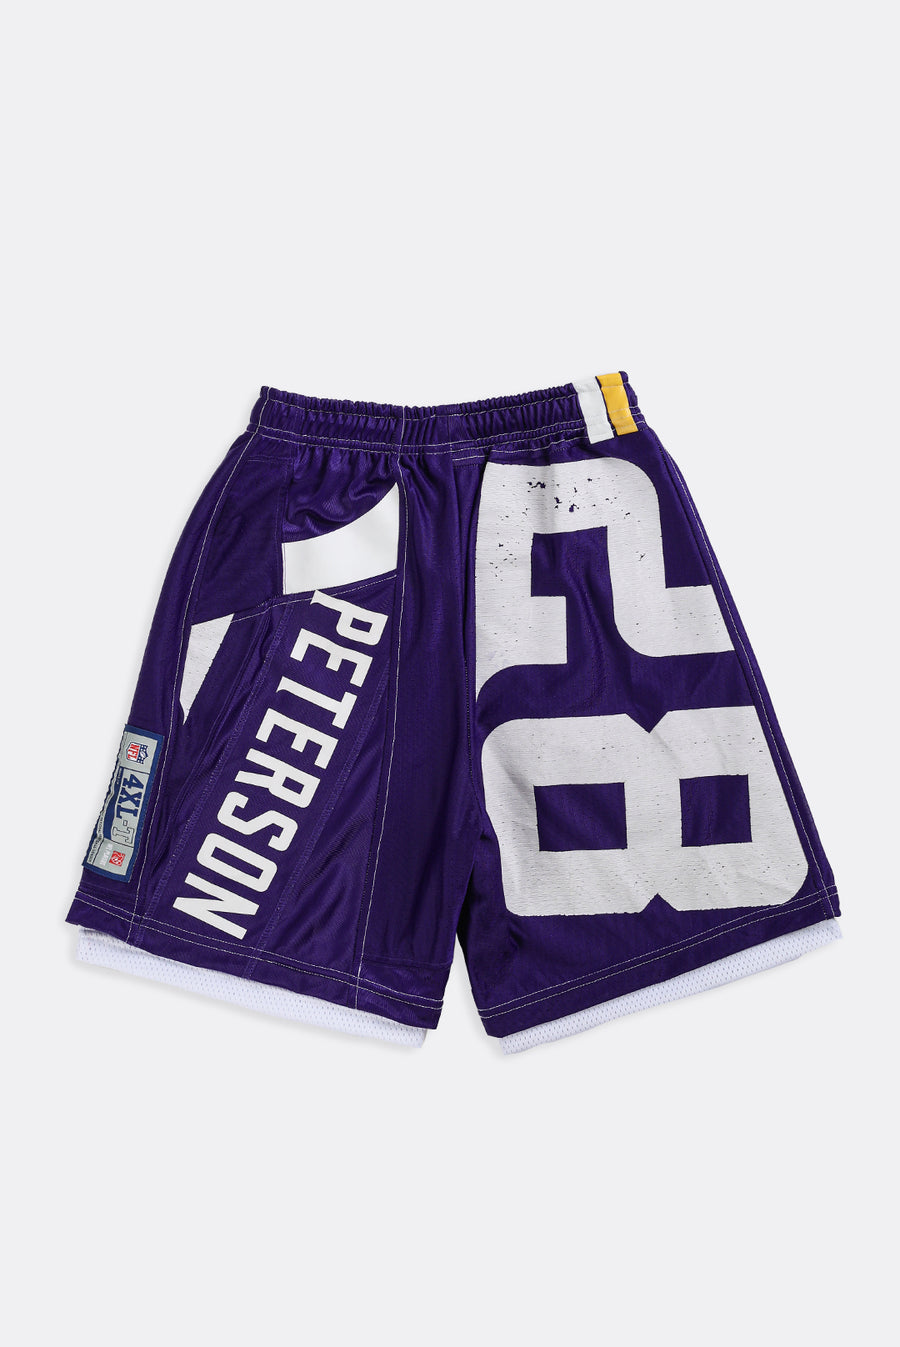 Unisex Rework Vikings NFL Jersey Shorts - Women-XS, Men-XXS